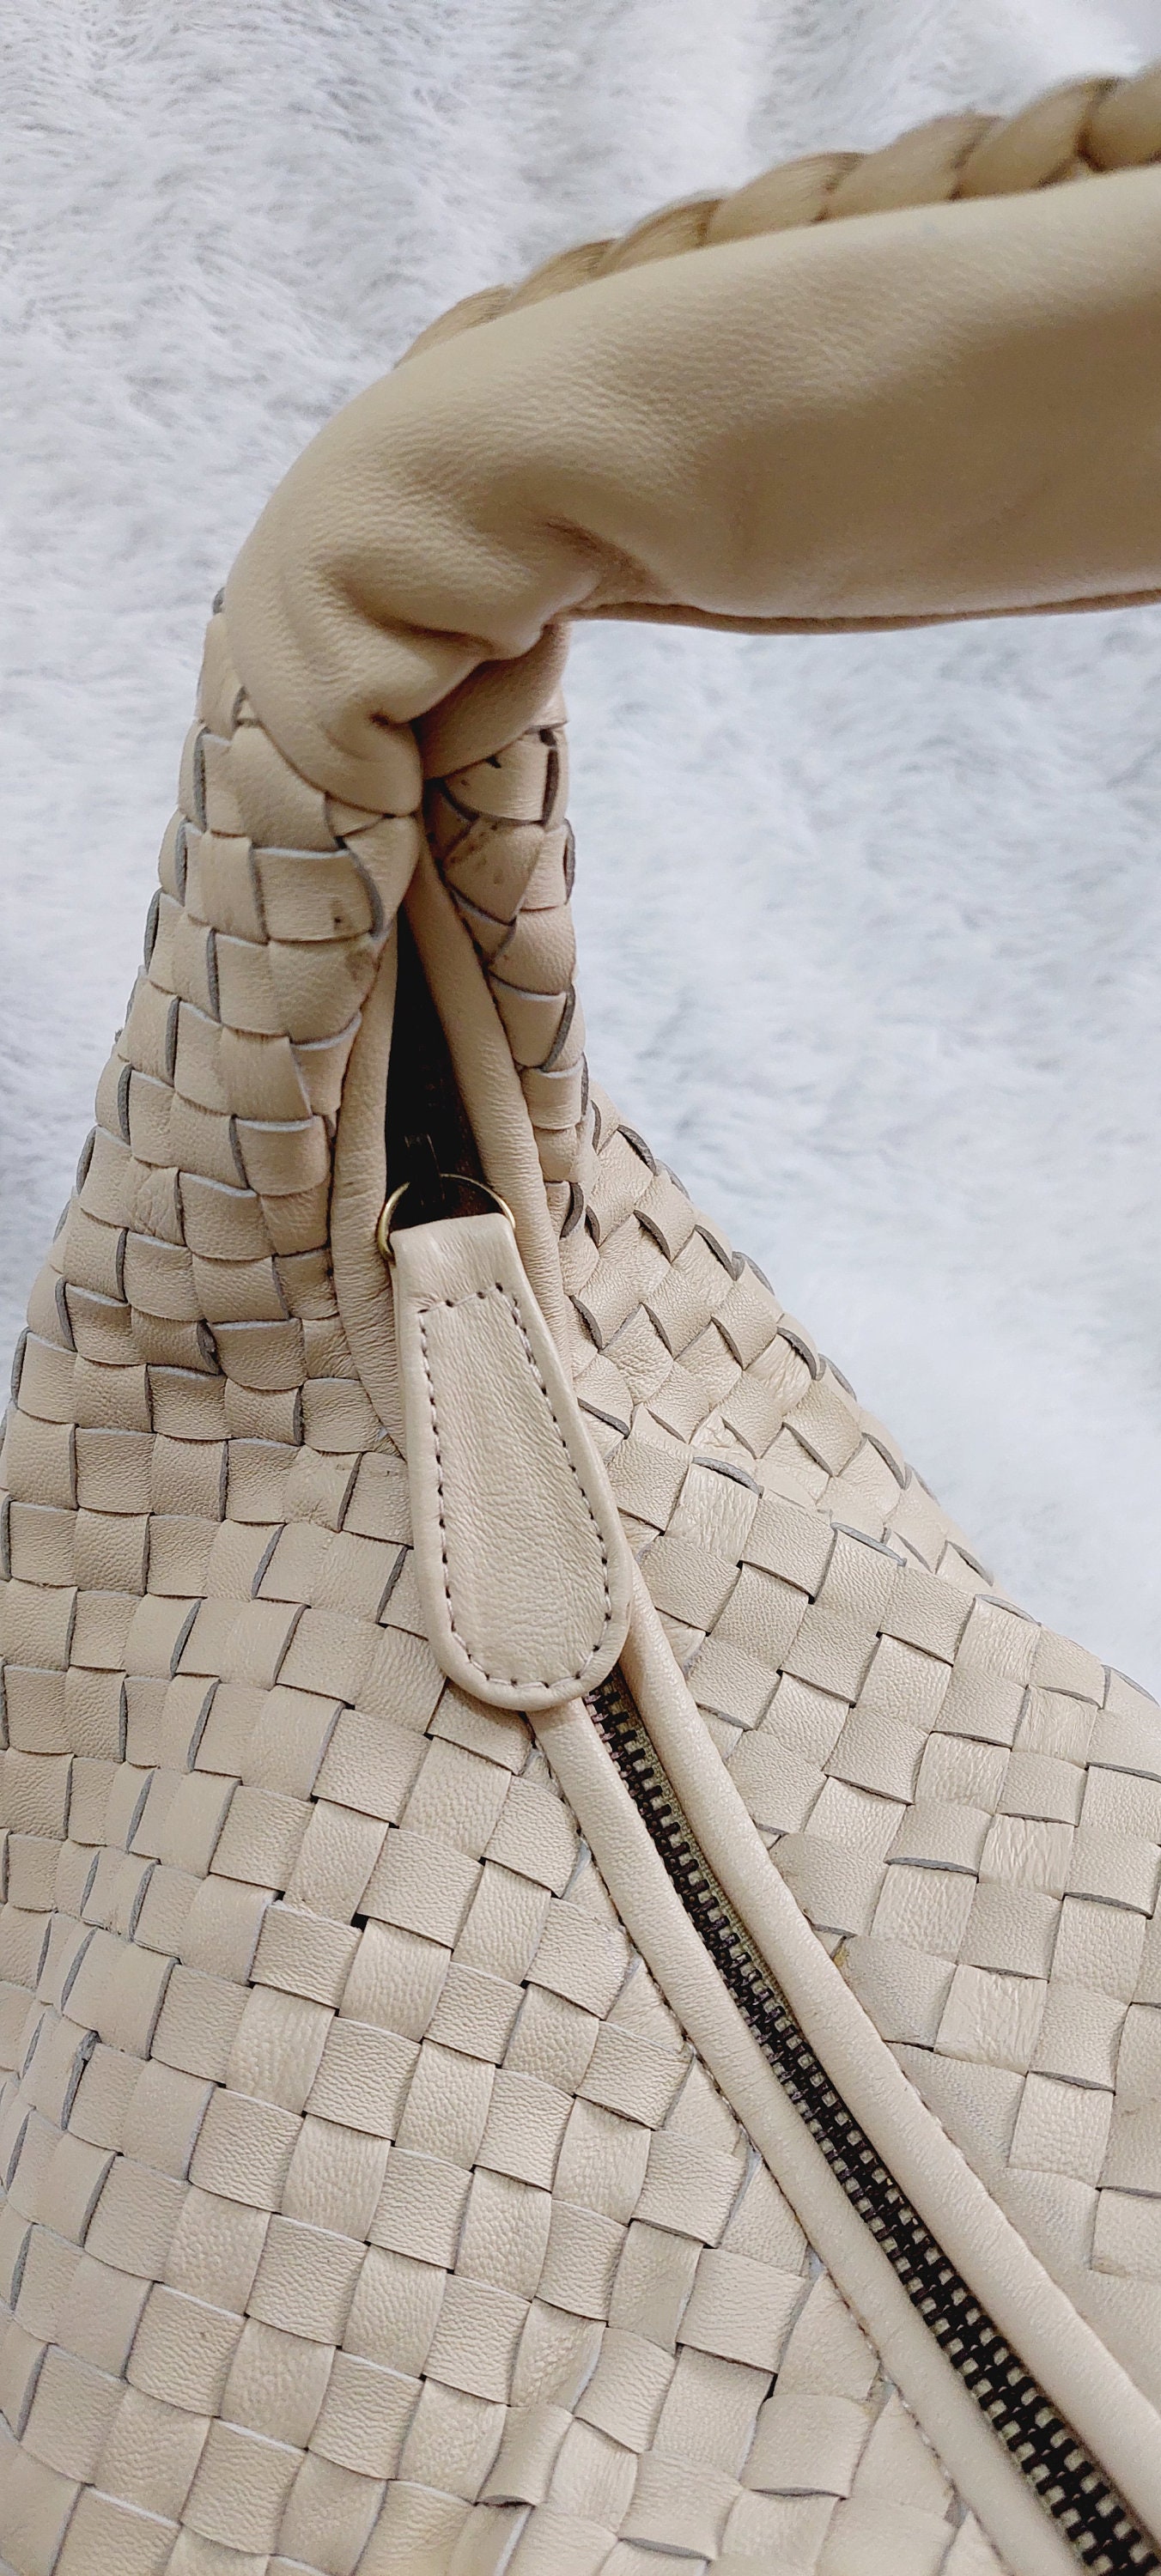 BANANA REPUBLIC Ivory-Cream Woven Cotton Textile & Leather Hobo Handbag